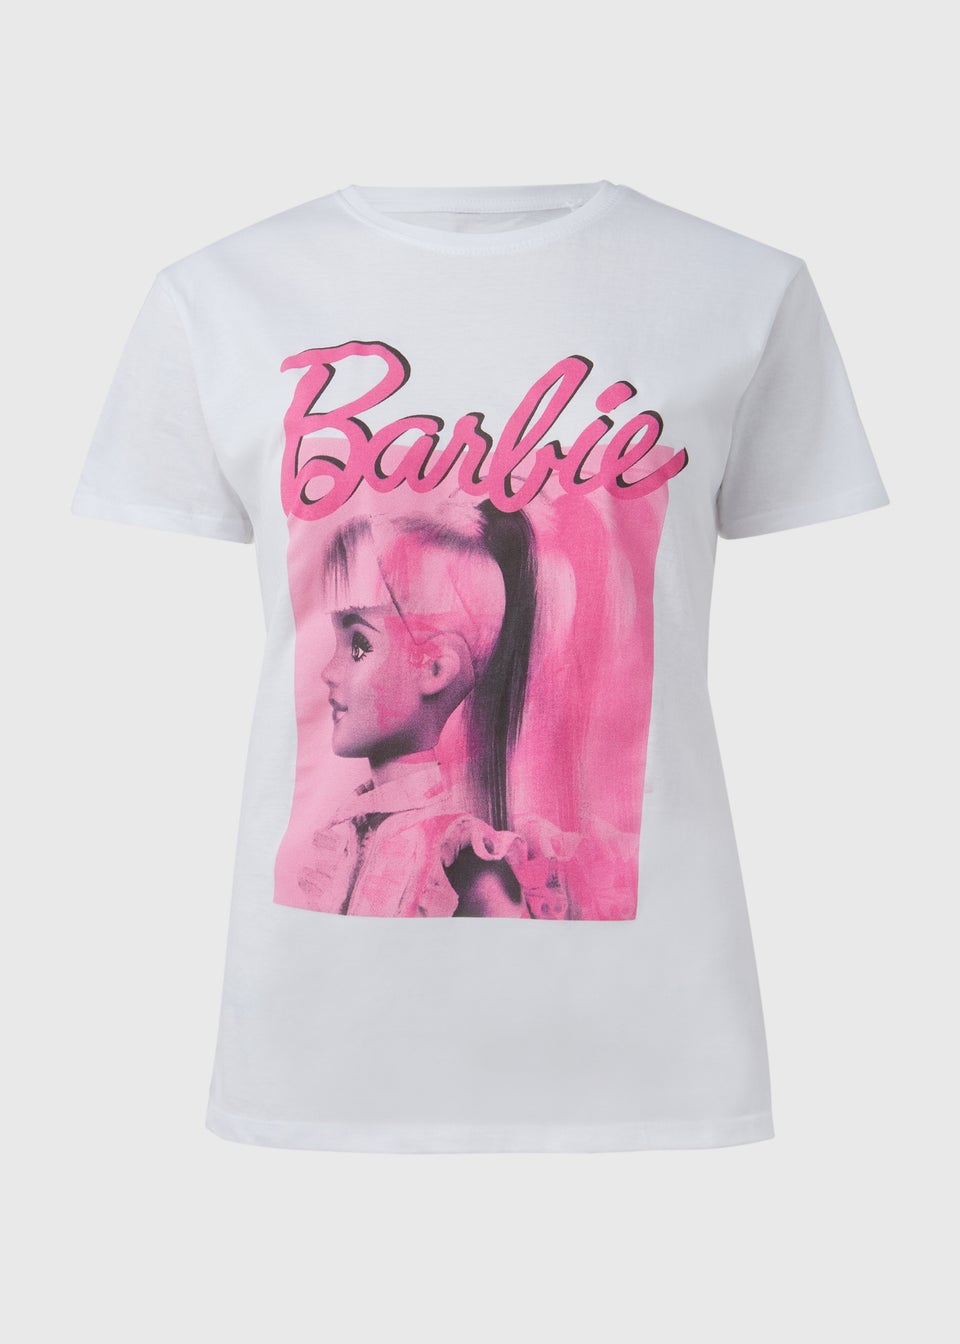 Barbie White T-Shirt - Matalan